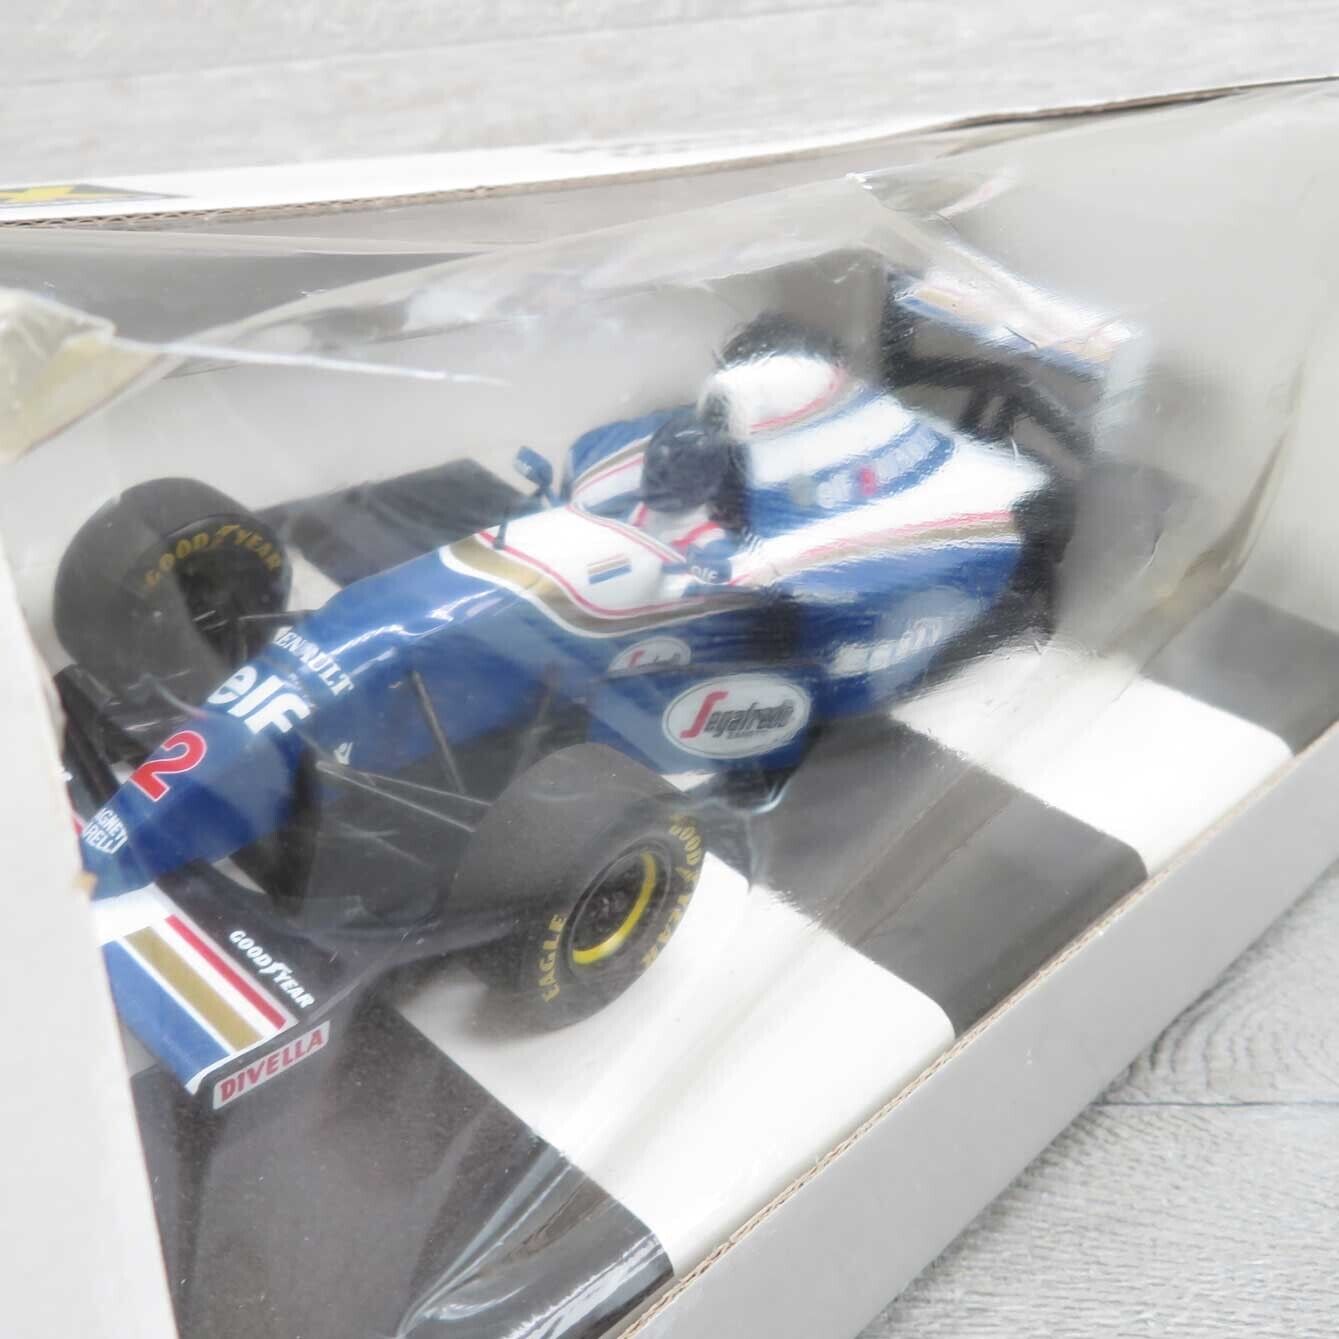 ONYX 5016 C - ? - Williams Renault FW16 French Grand Prix - OVP - #BO82853